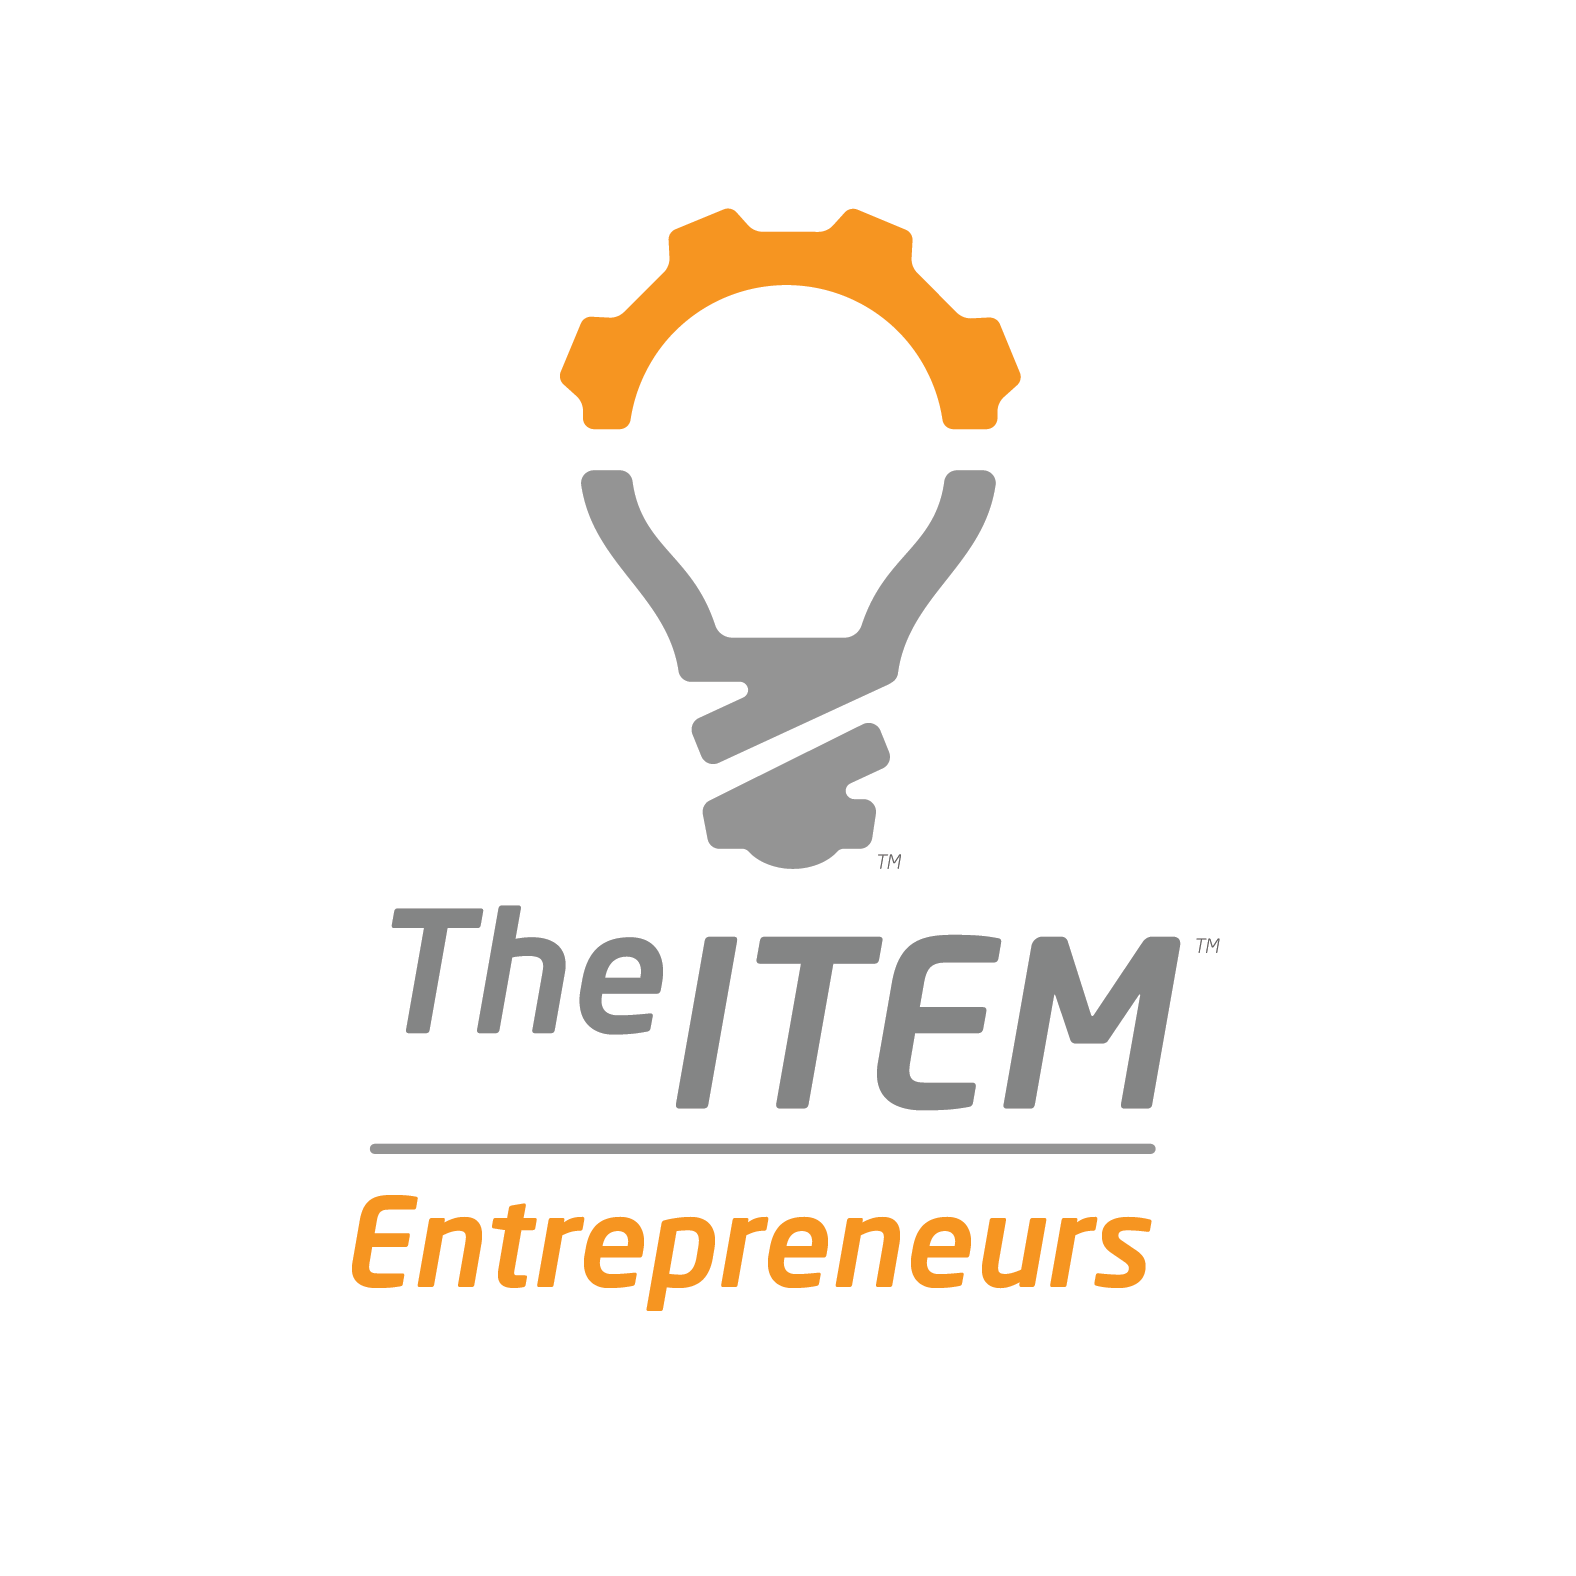 The ITEM Entrepreneurs